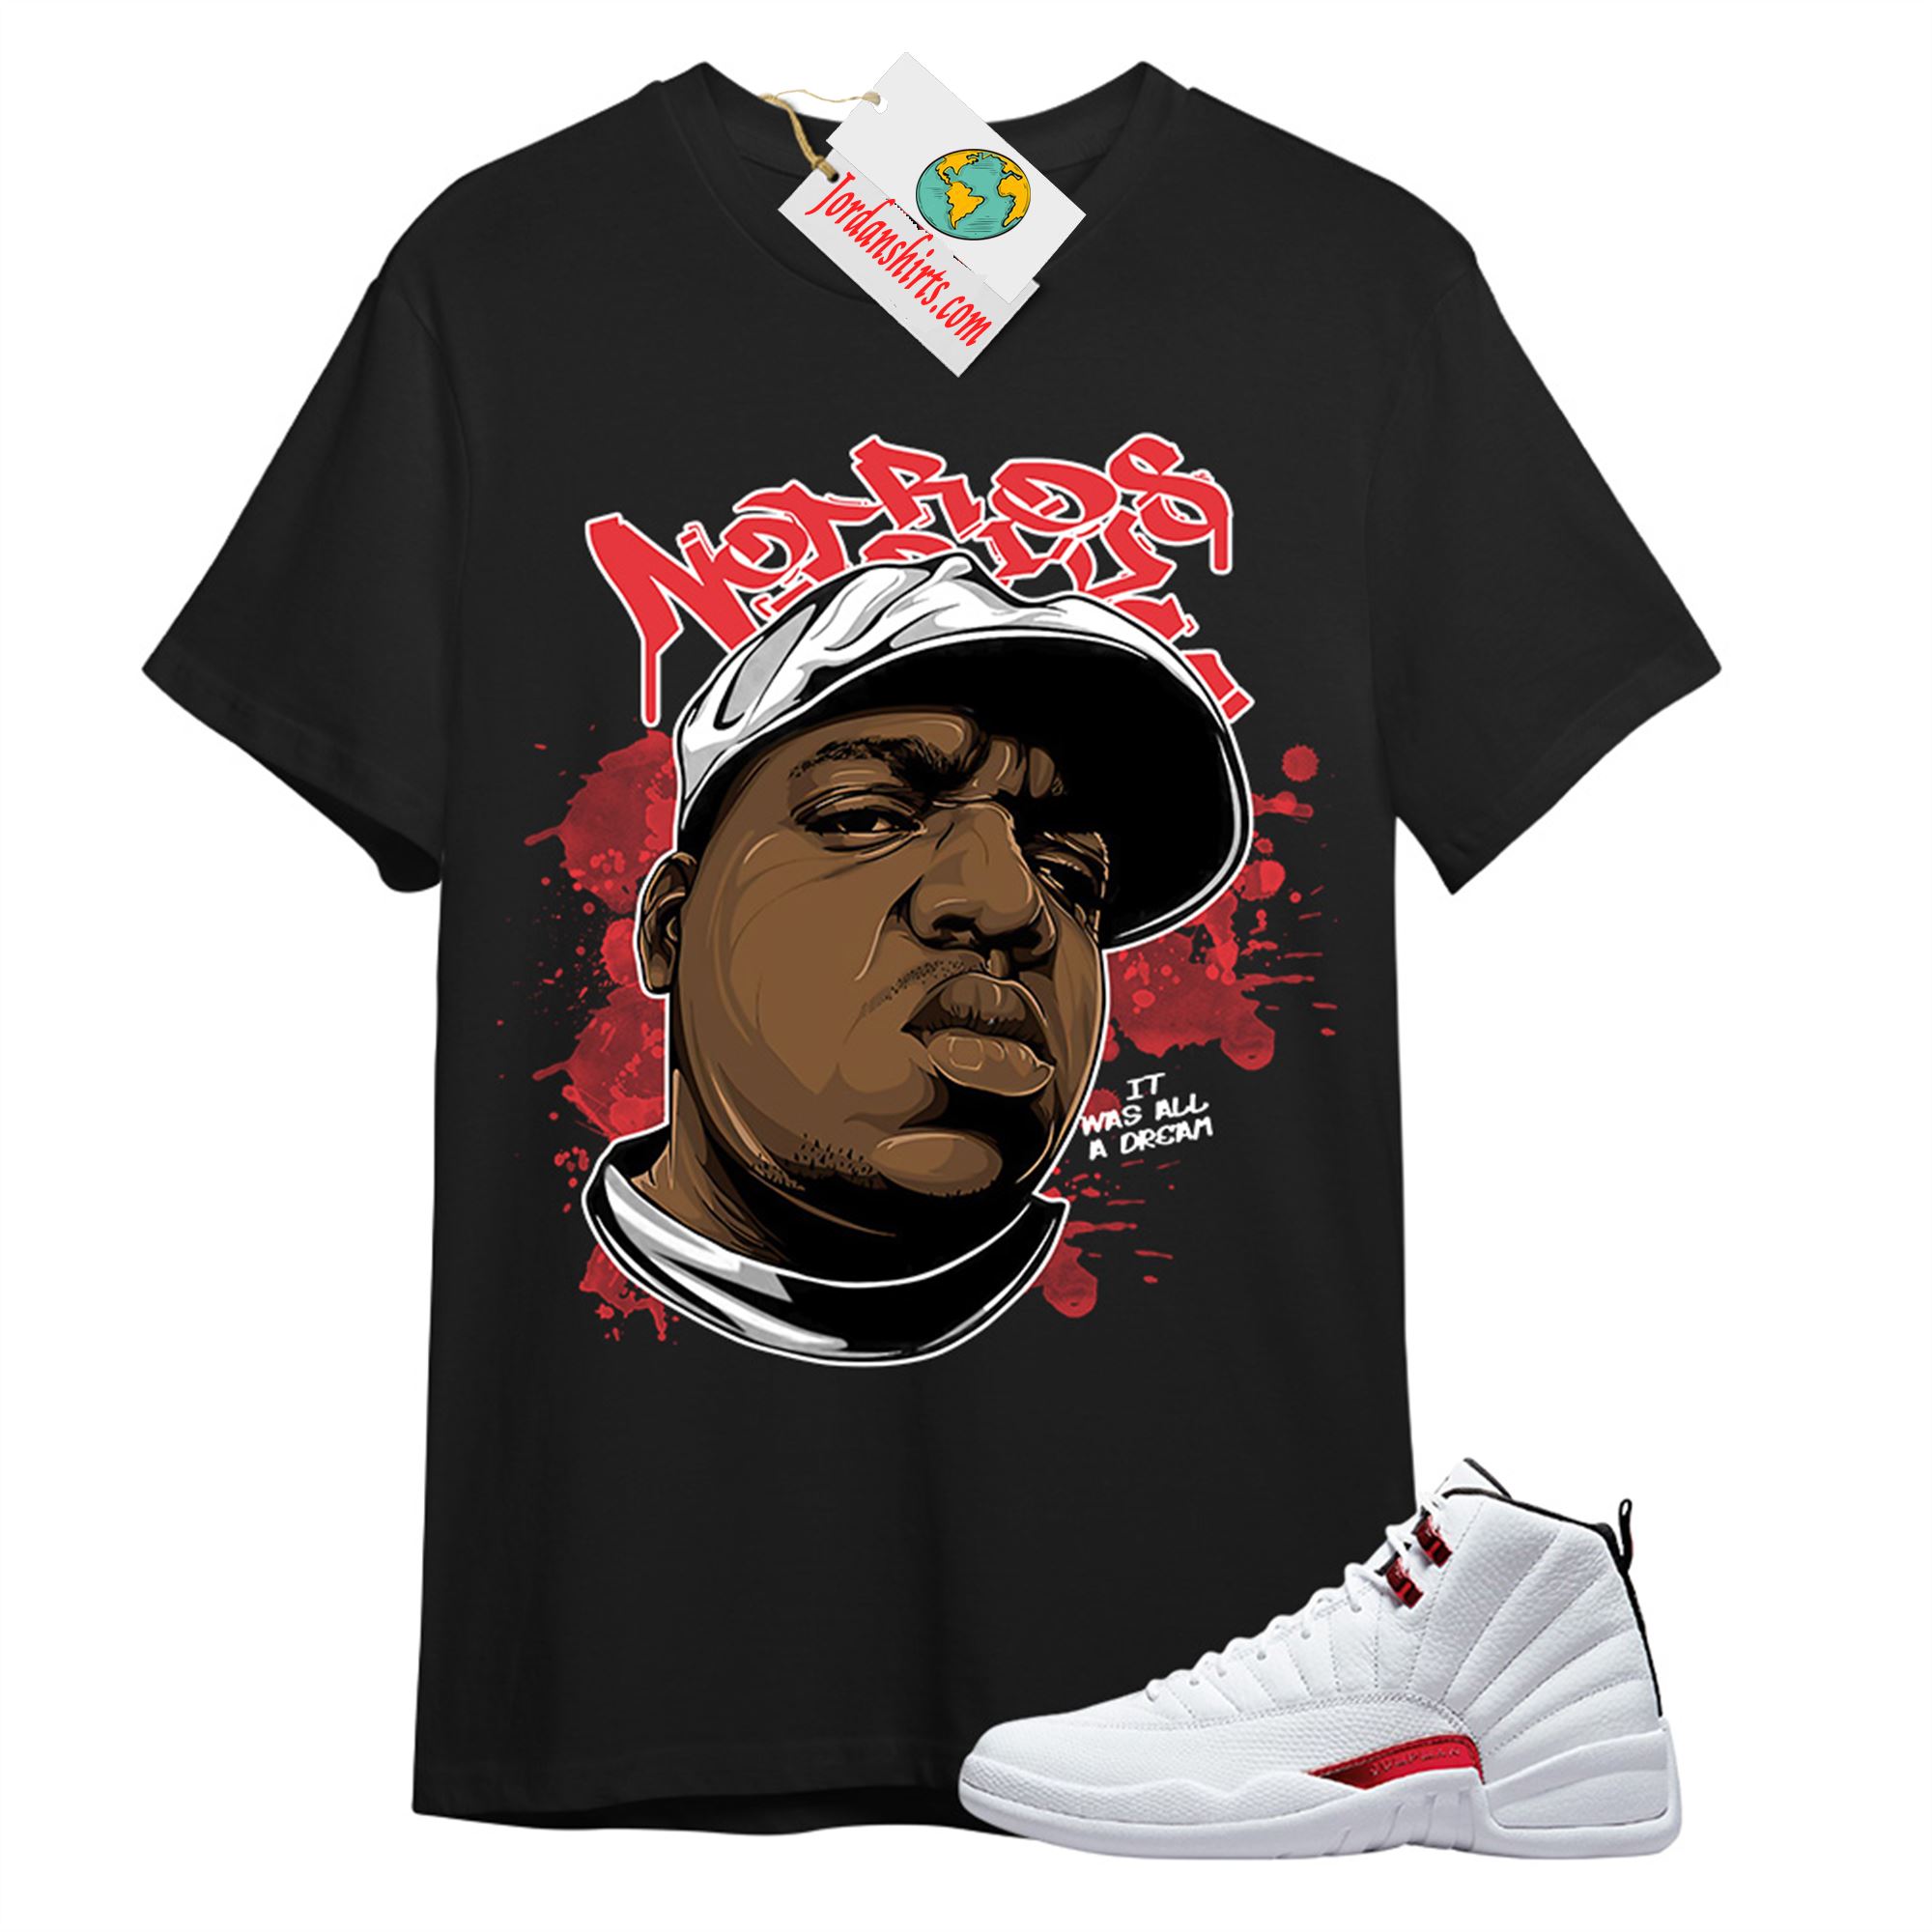 Jordan 12 Shirt, Notorious Big Black T-shirt Air Jordan 12 Twist 12s Size Up To 5xl